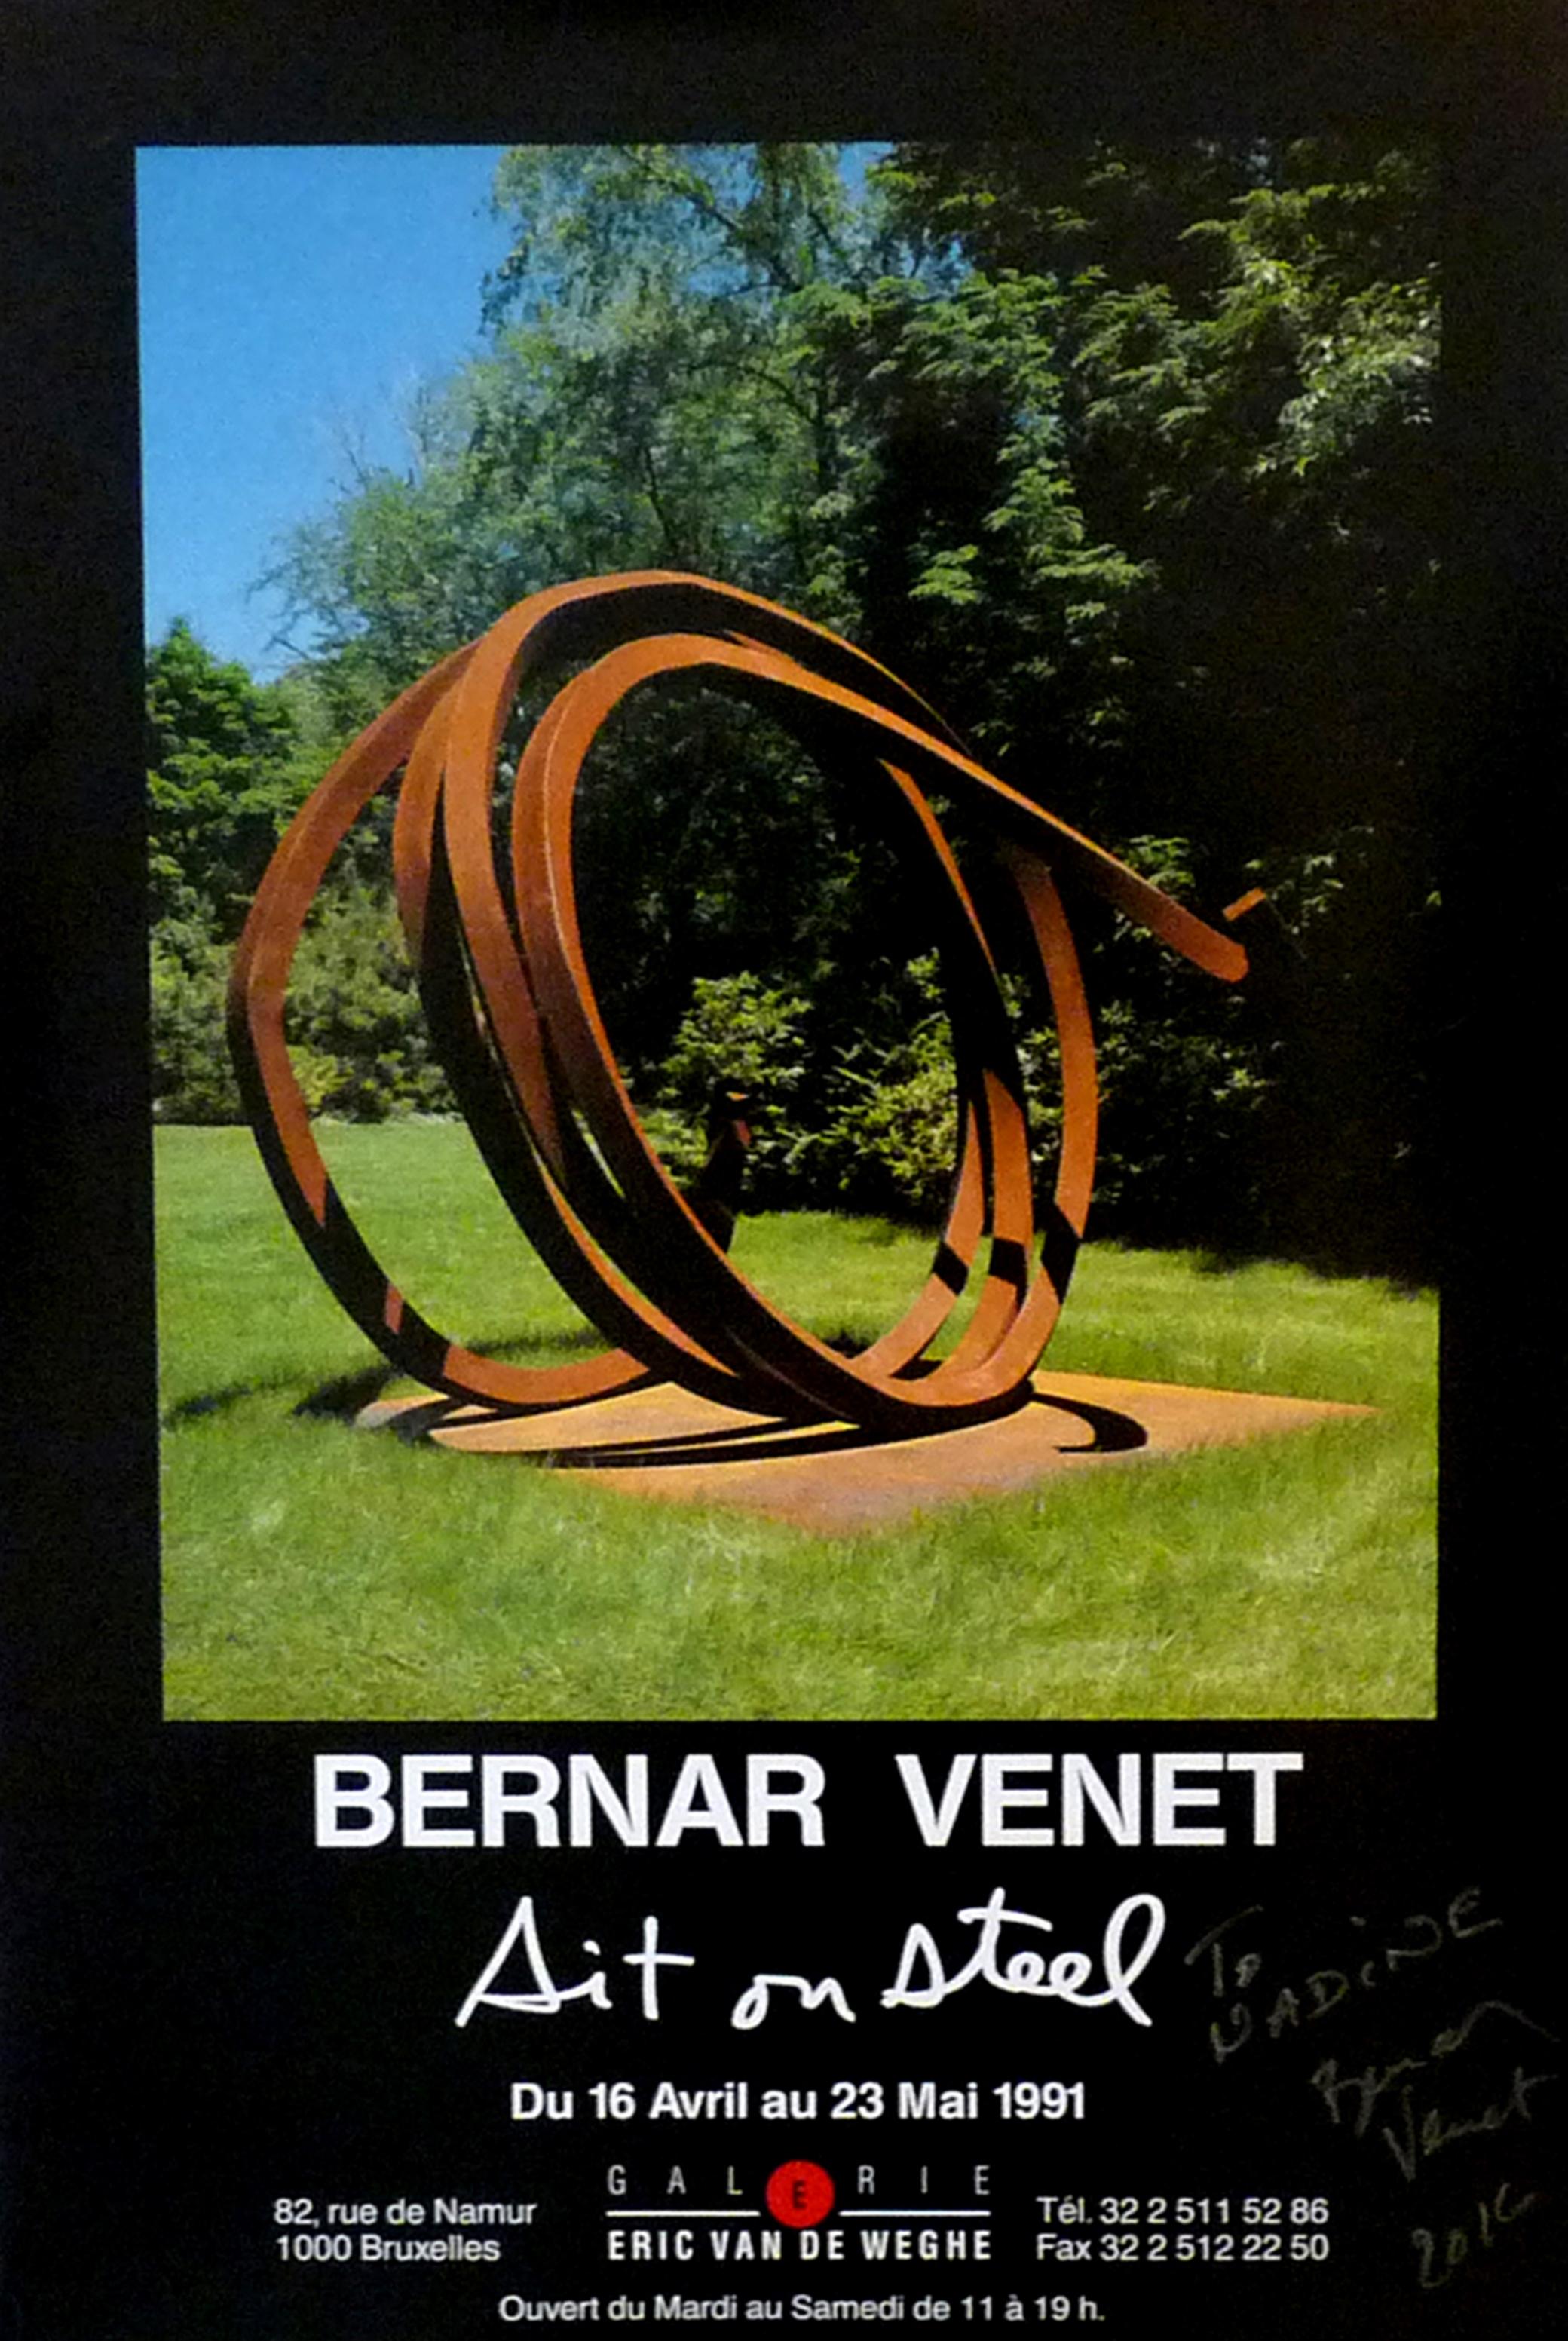 Bernar Venet Landscape Print – Sit on Steel, Europäisches Minimalisten-Poster, handsigniert & beschriftet Nadine